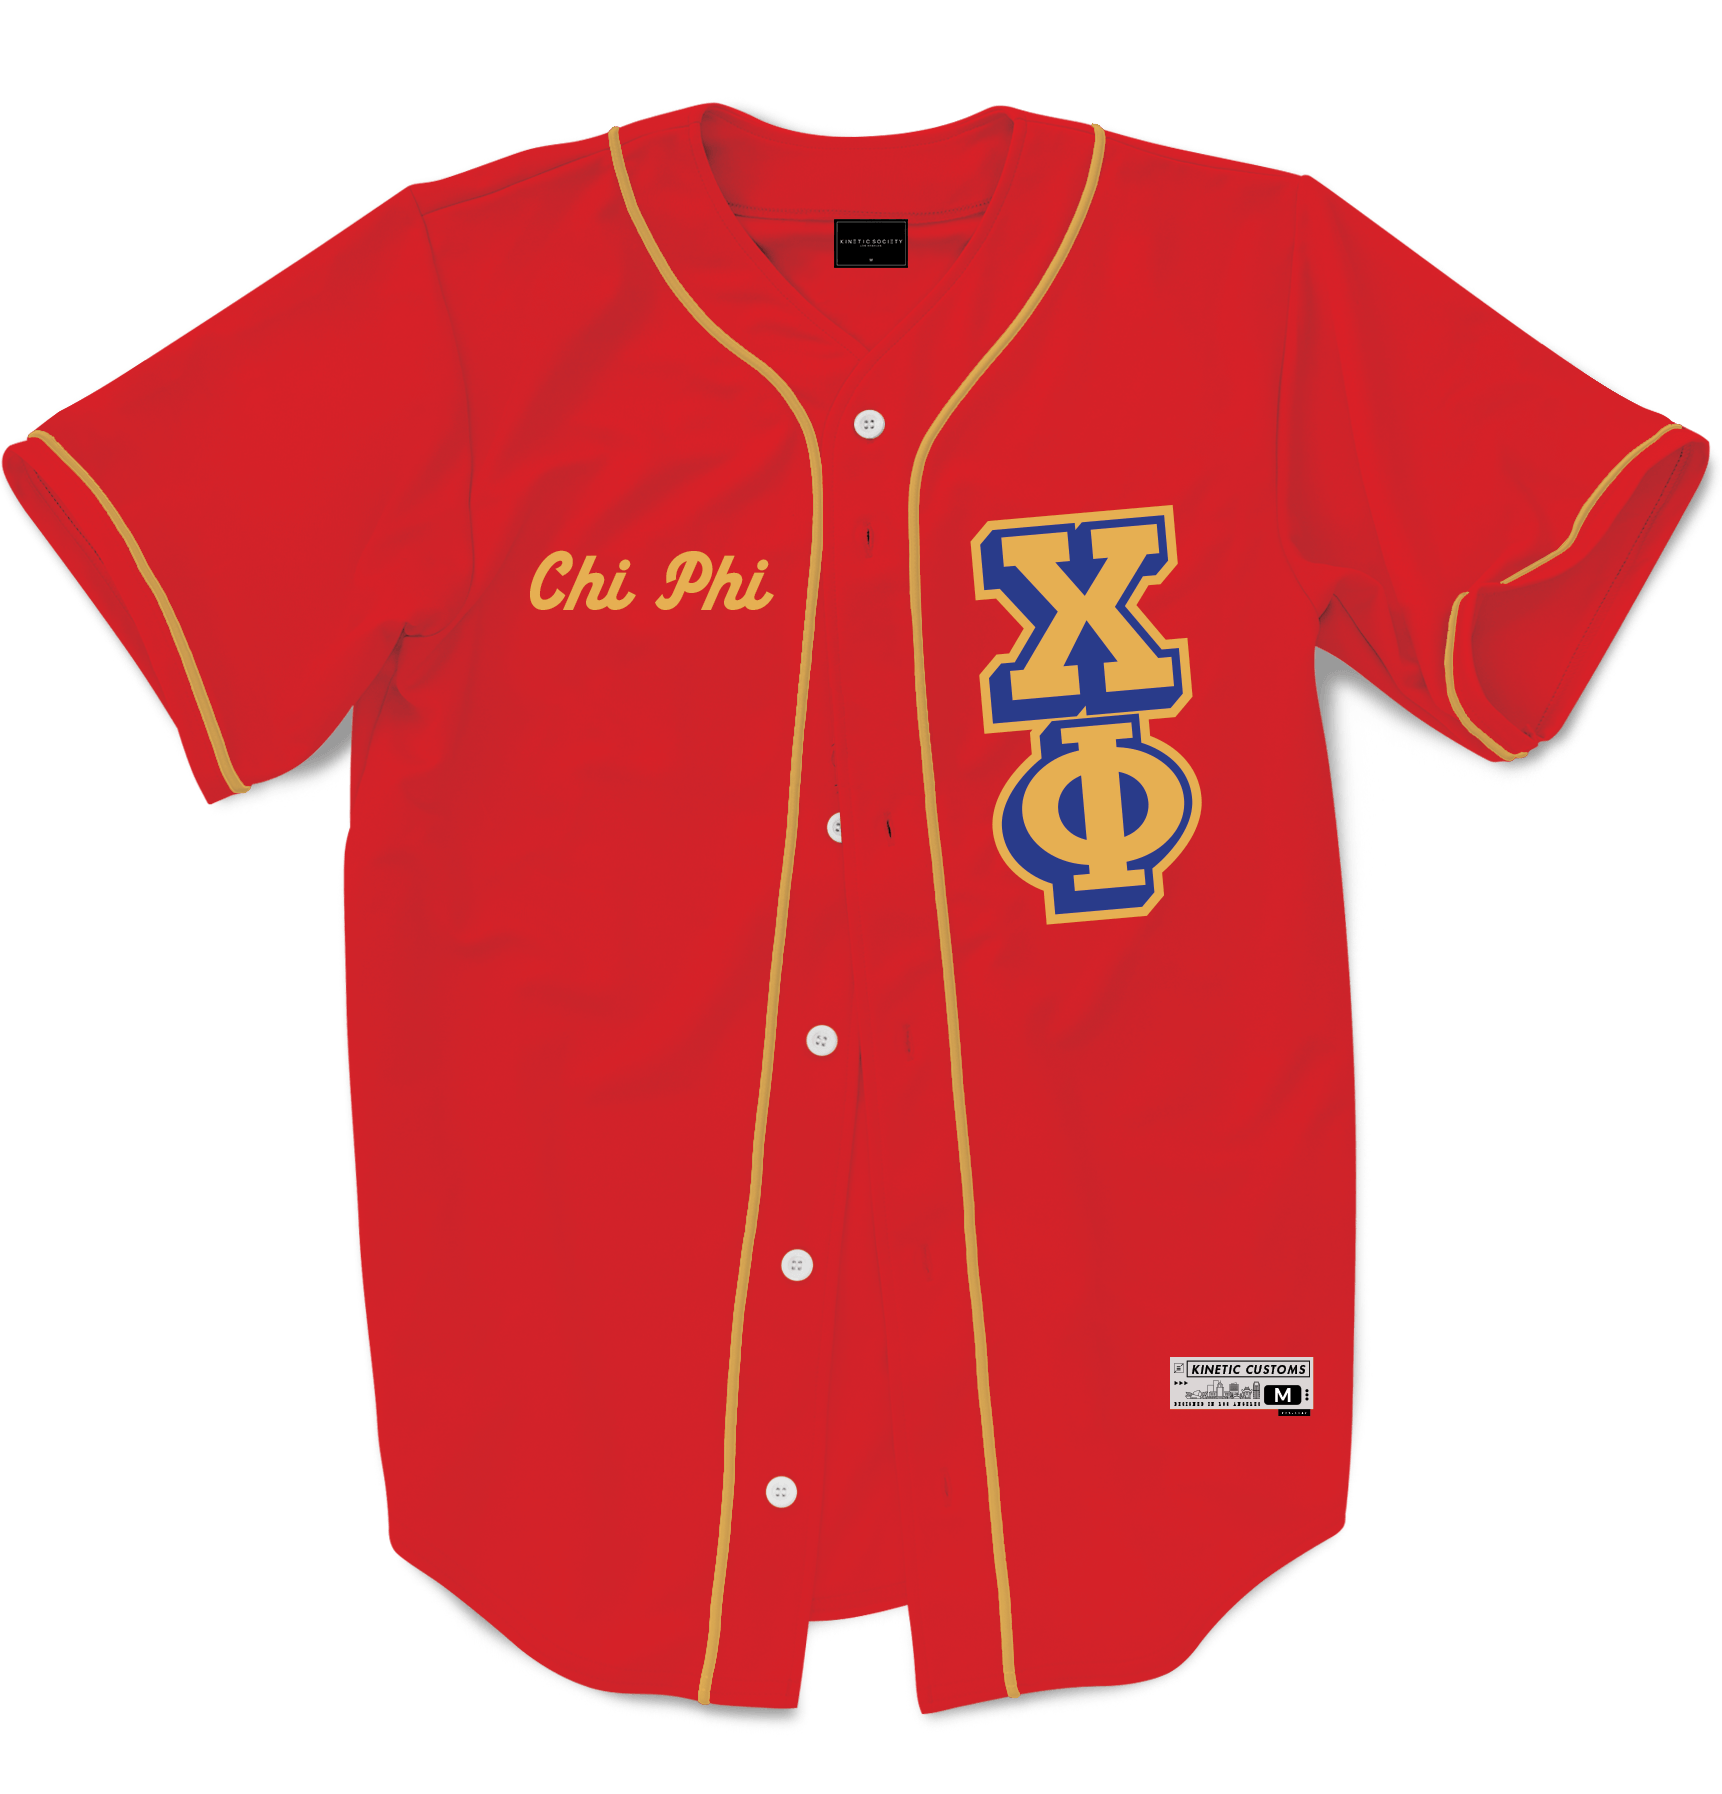 CHI PHI - The Block Baseball Jersey Premium Baseball Kinetic Society LLC 